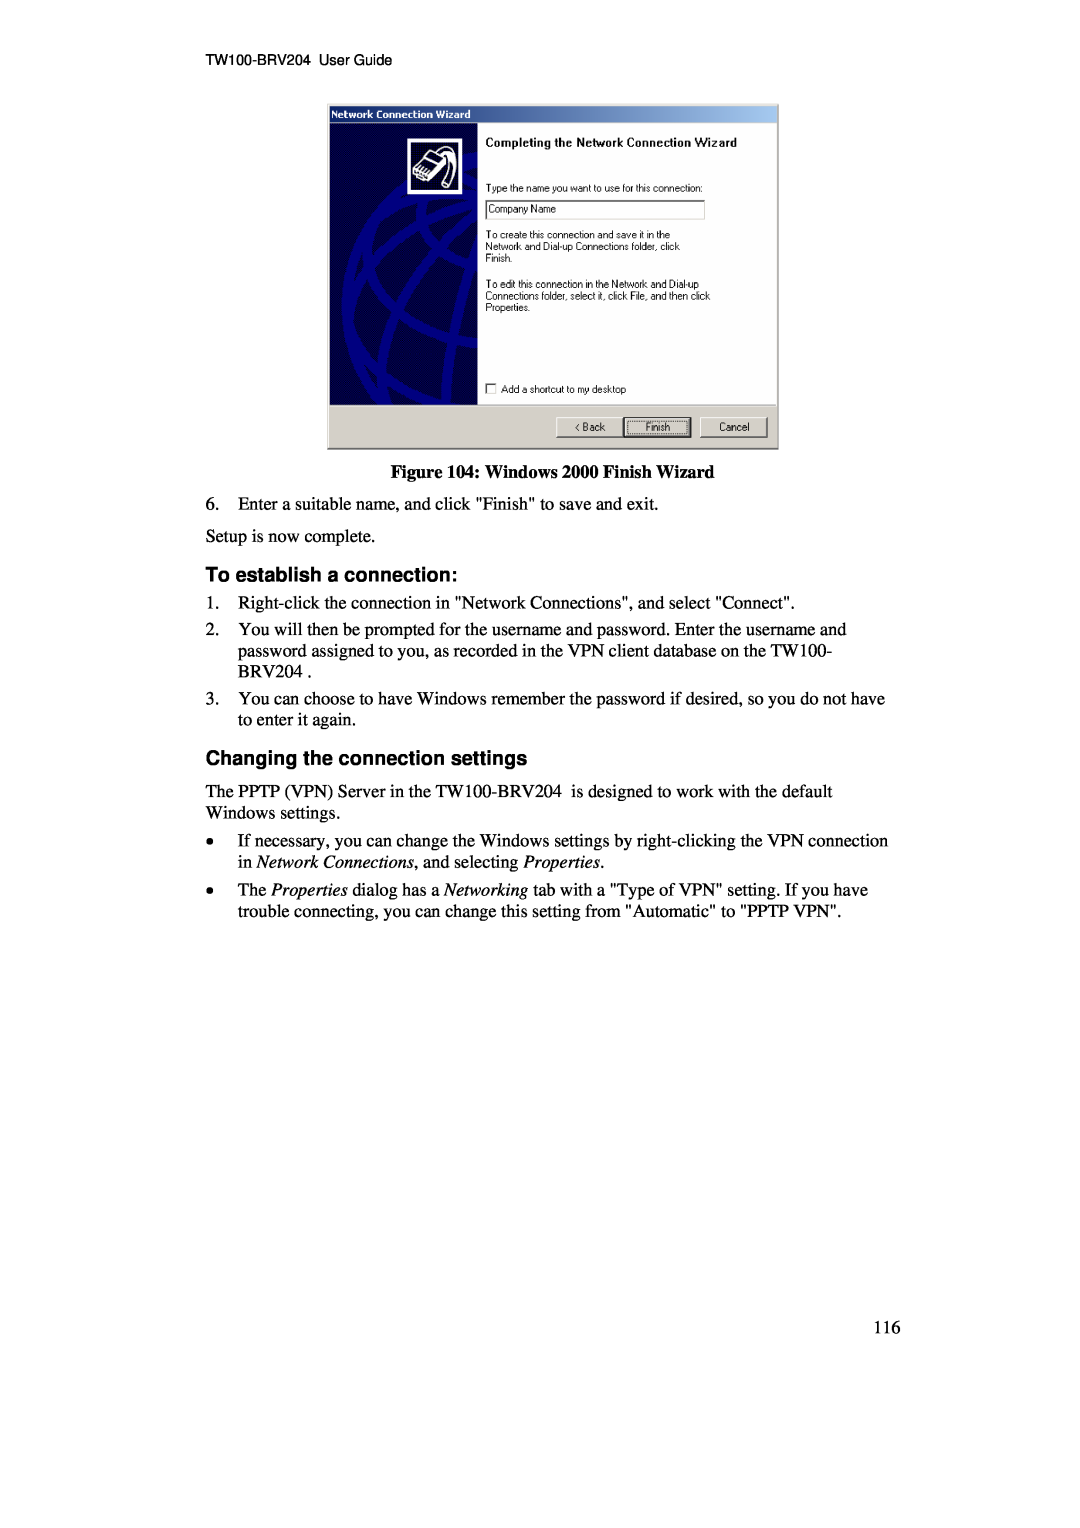 TRENDnet BRV204 manual Windows 2000 Finish Wizard 